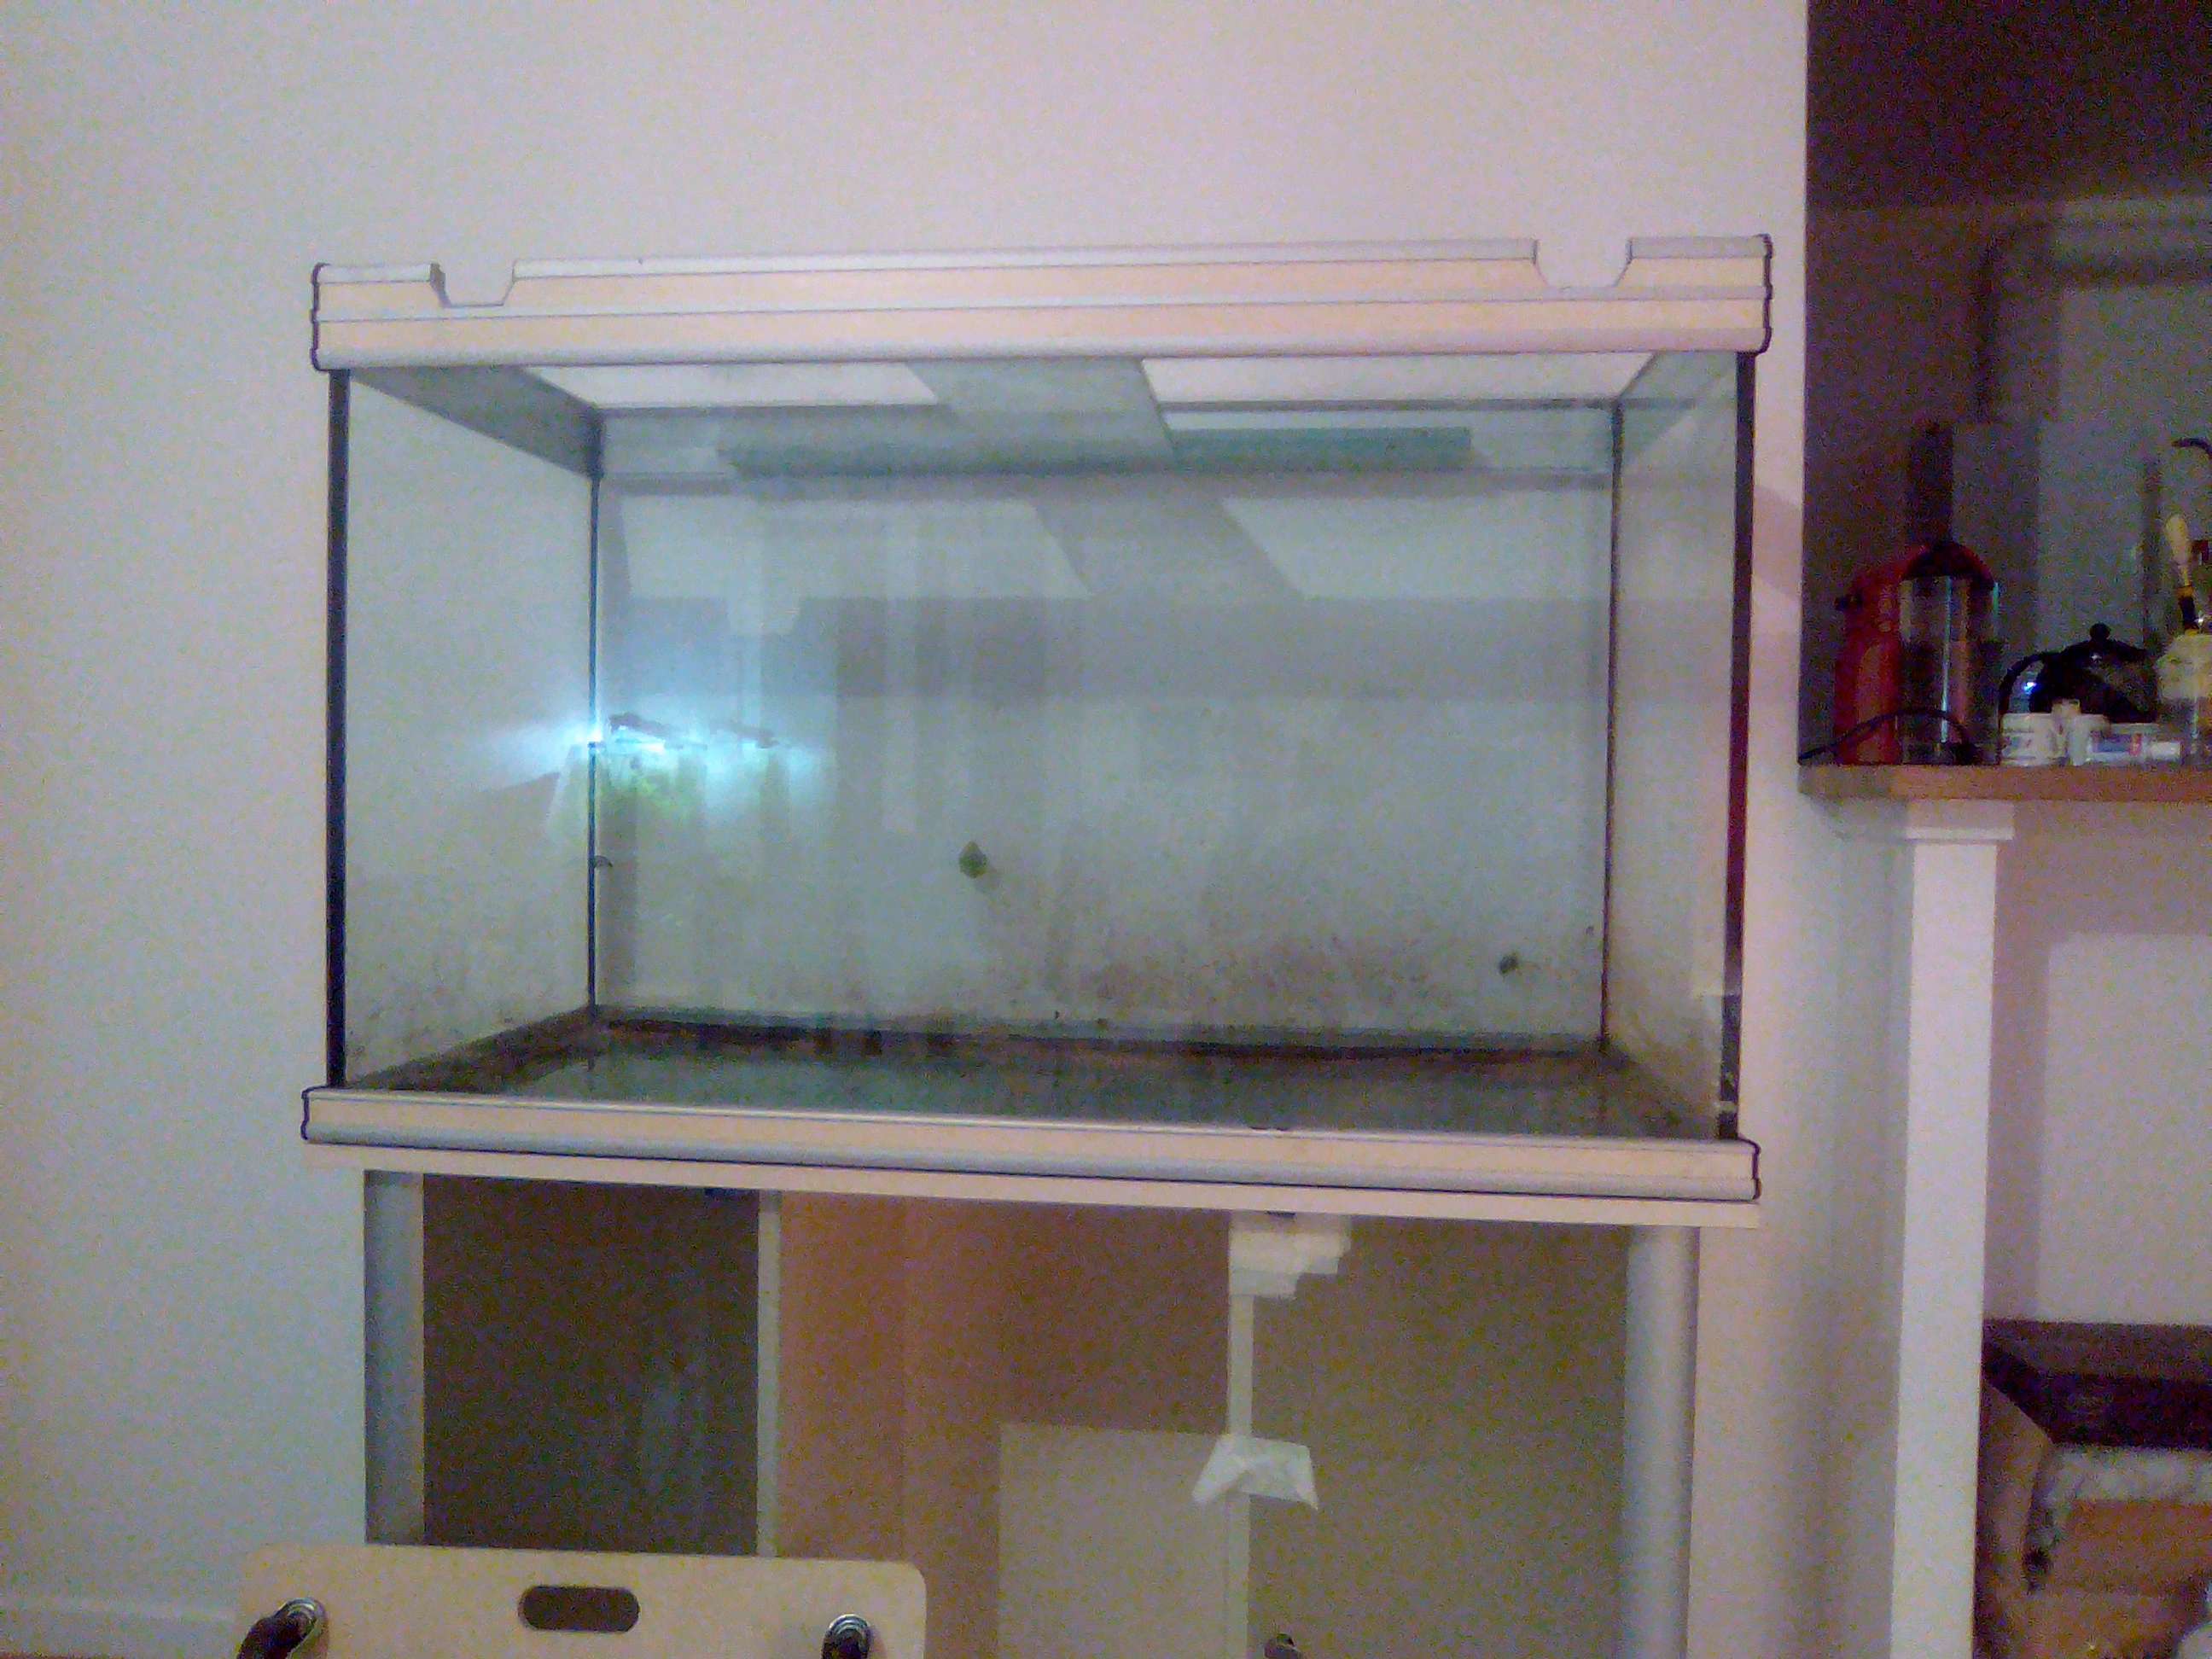 Custo de mon nouvel aquarium (475 litres net) Img_2012